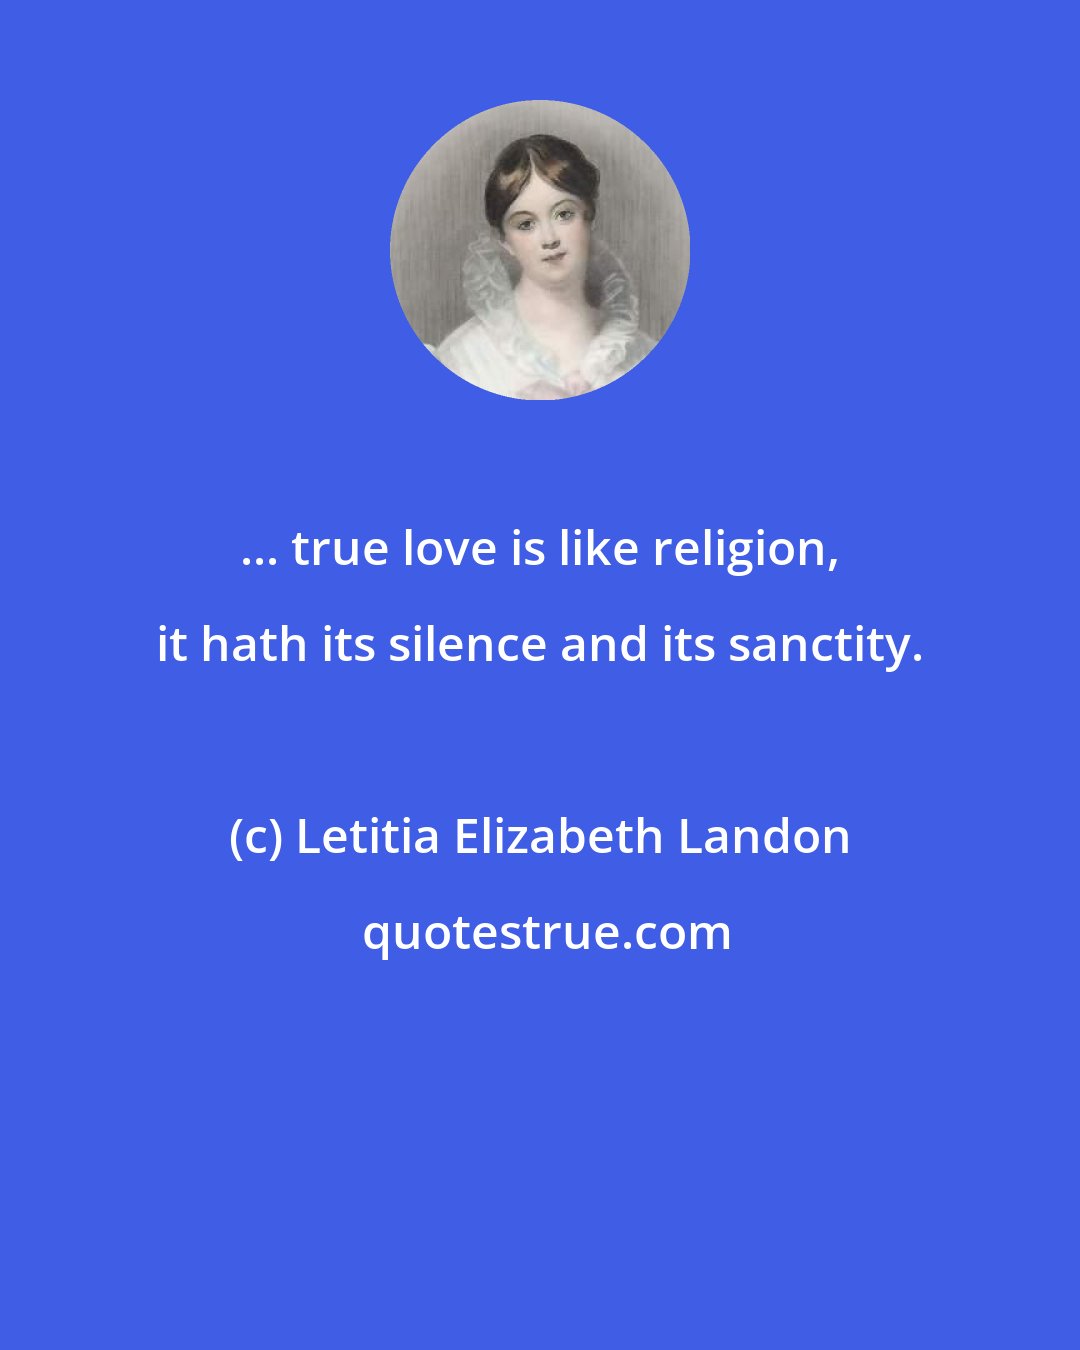 Letitia Elizabeth Landon: ... true love is like religion, it hath its silence and its sanctity.